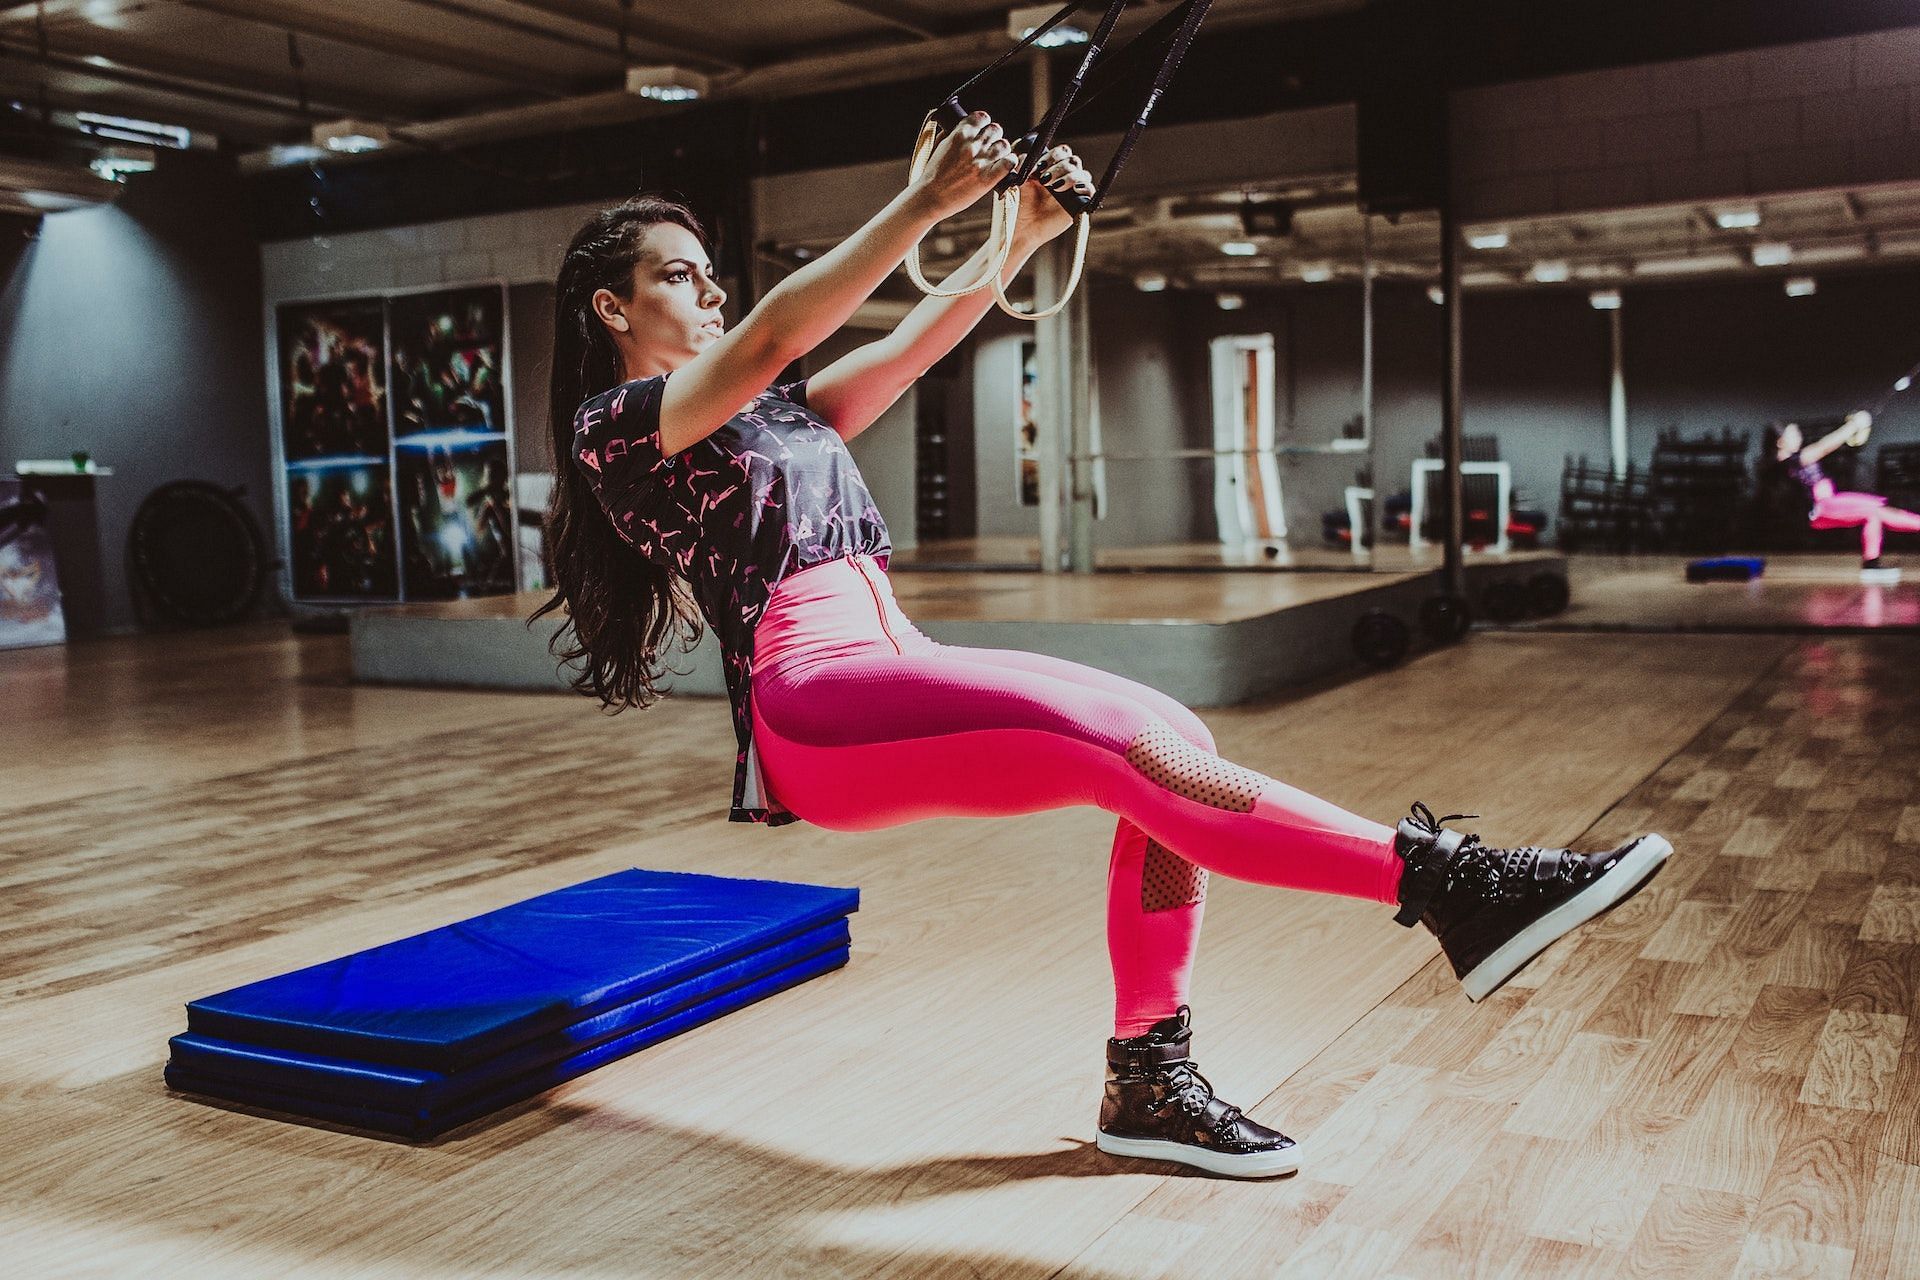 TRX exercises offer a full-body workout. (Photo via Pexels/Jonathan Borba)